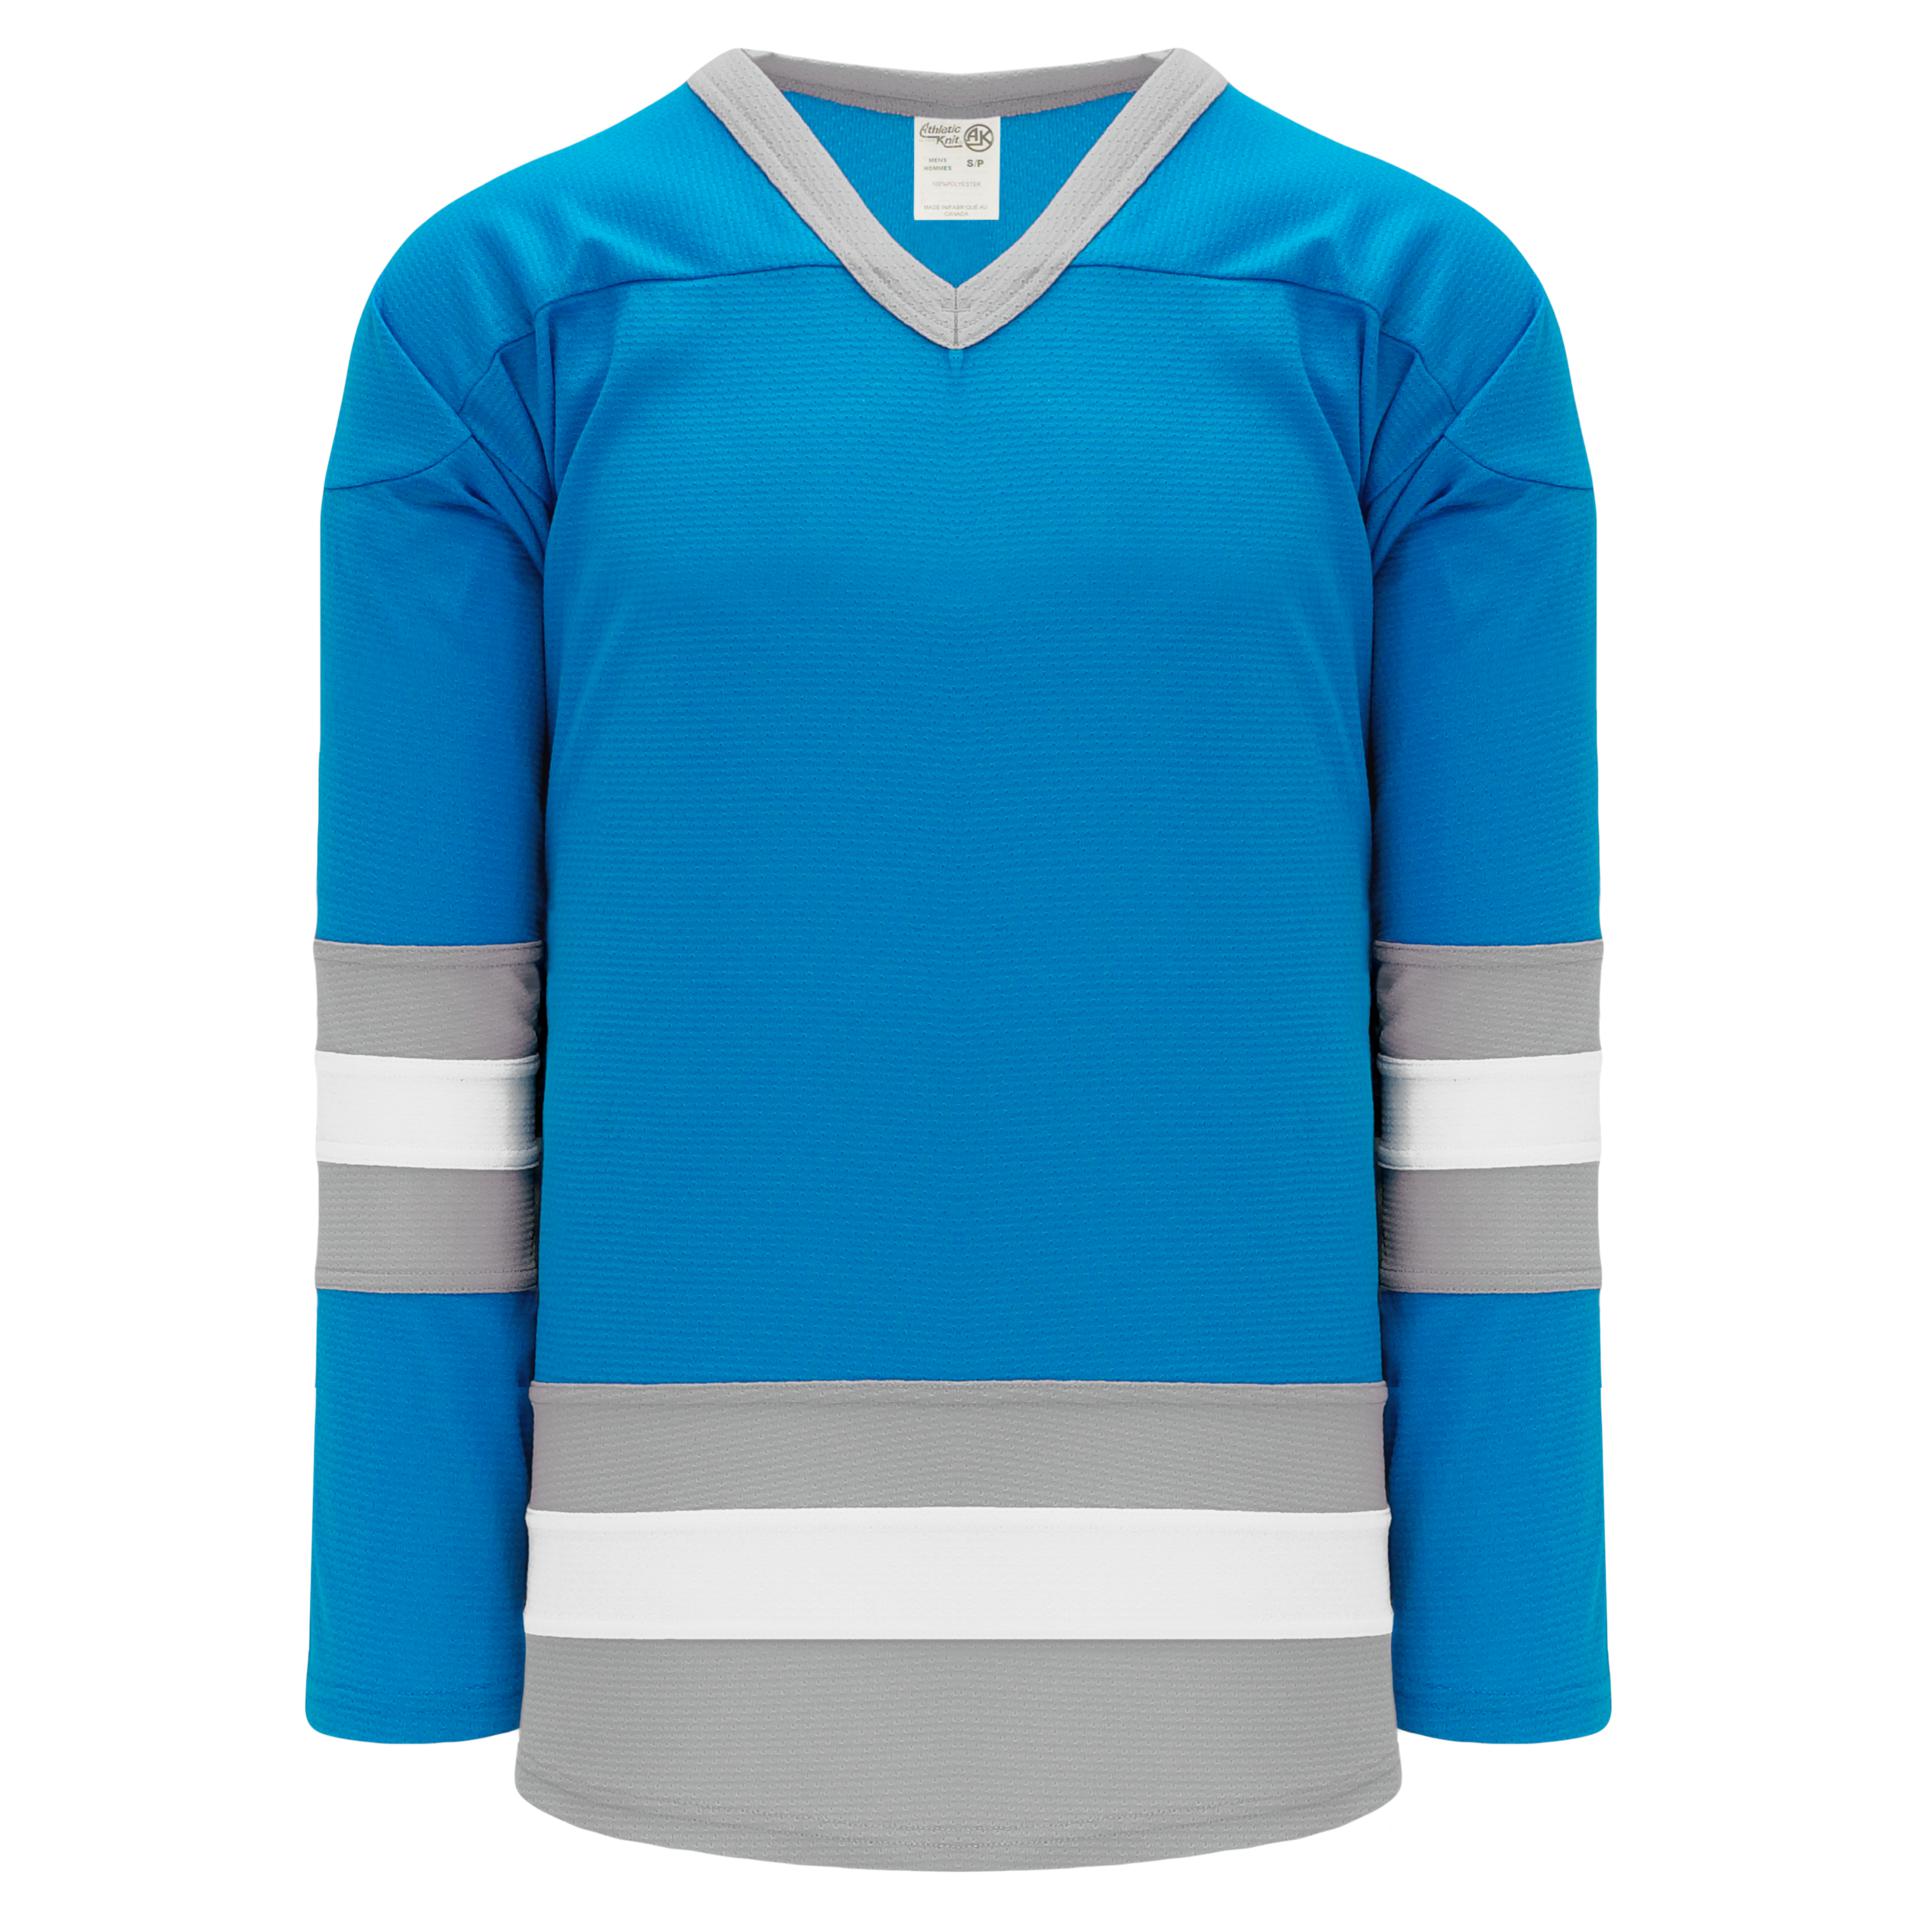 H6500-459 Pro Blue/Grey/White League Style Blank Hockey Jerseys Adult XL